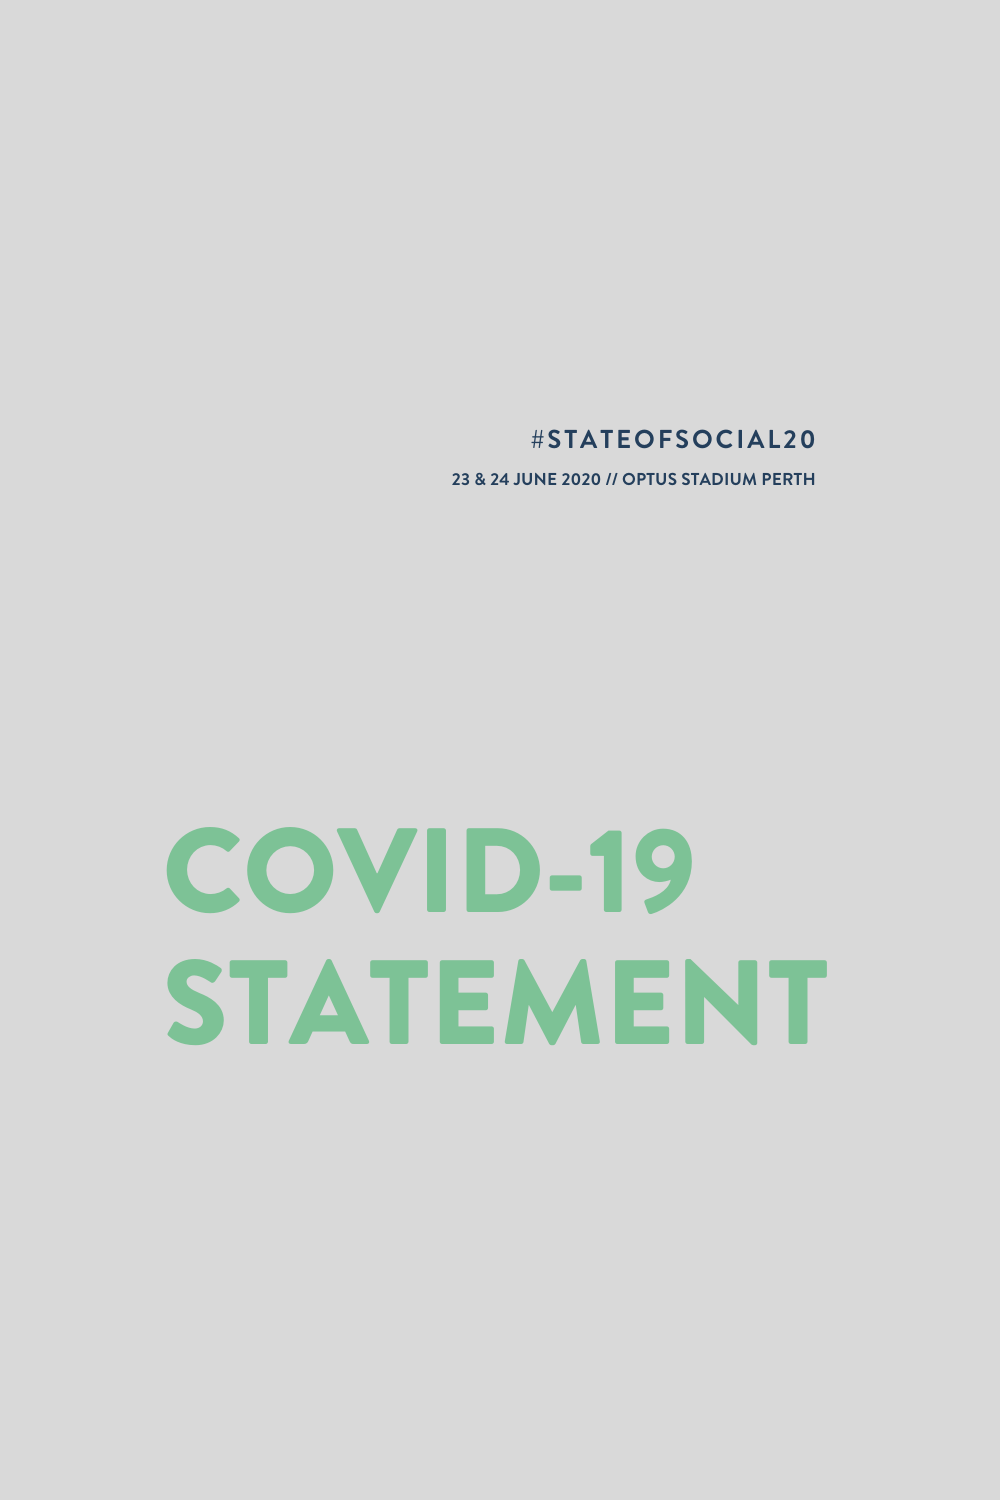 A statement regarding COVID-19